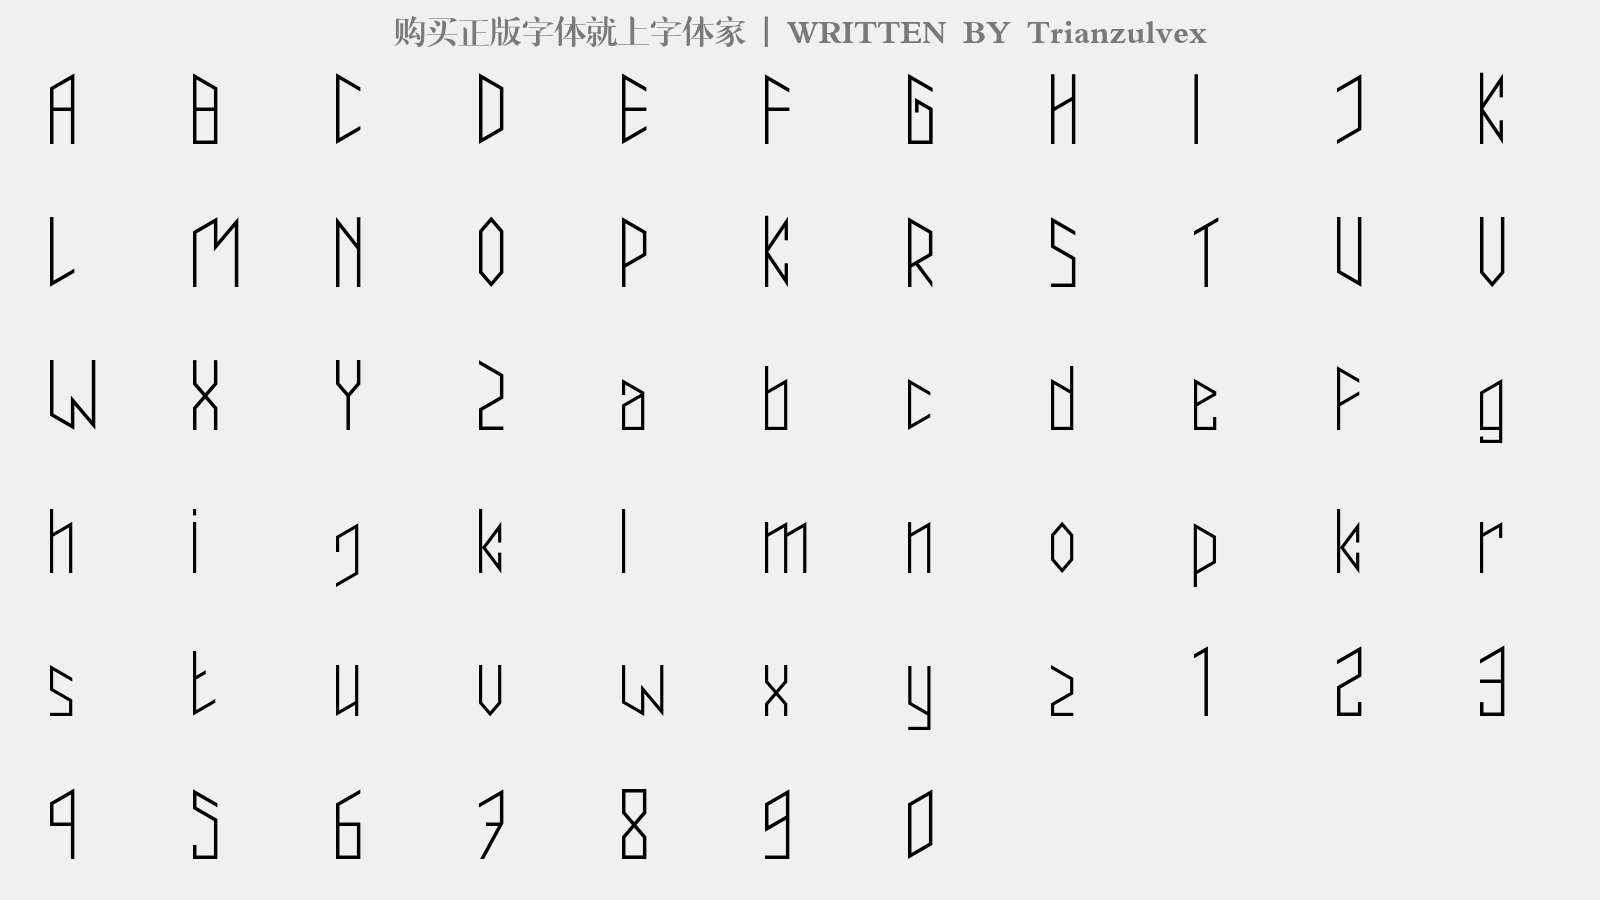 Trianzulvex - 大写字母/小写字母/数字